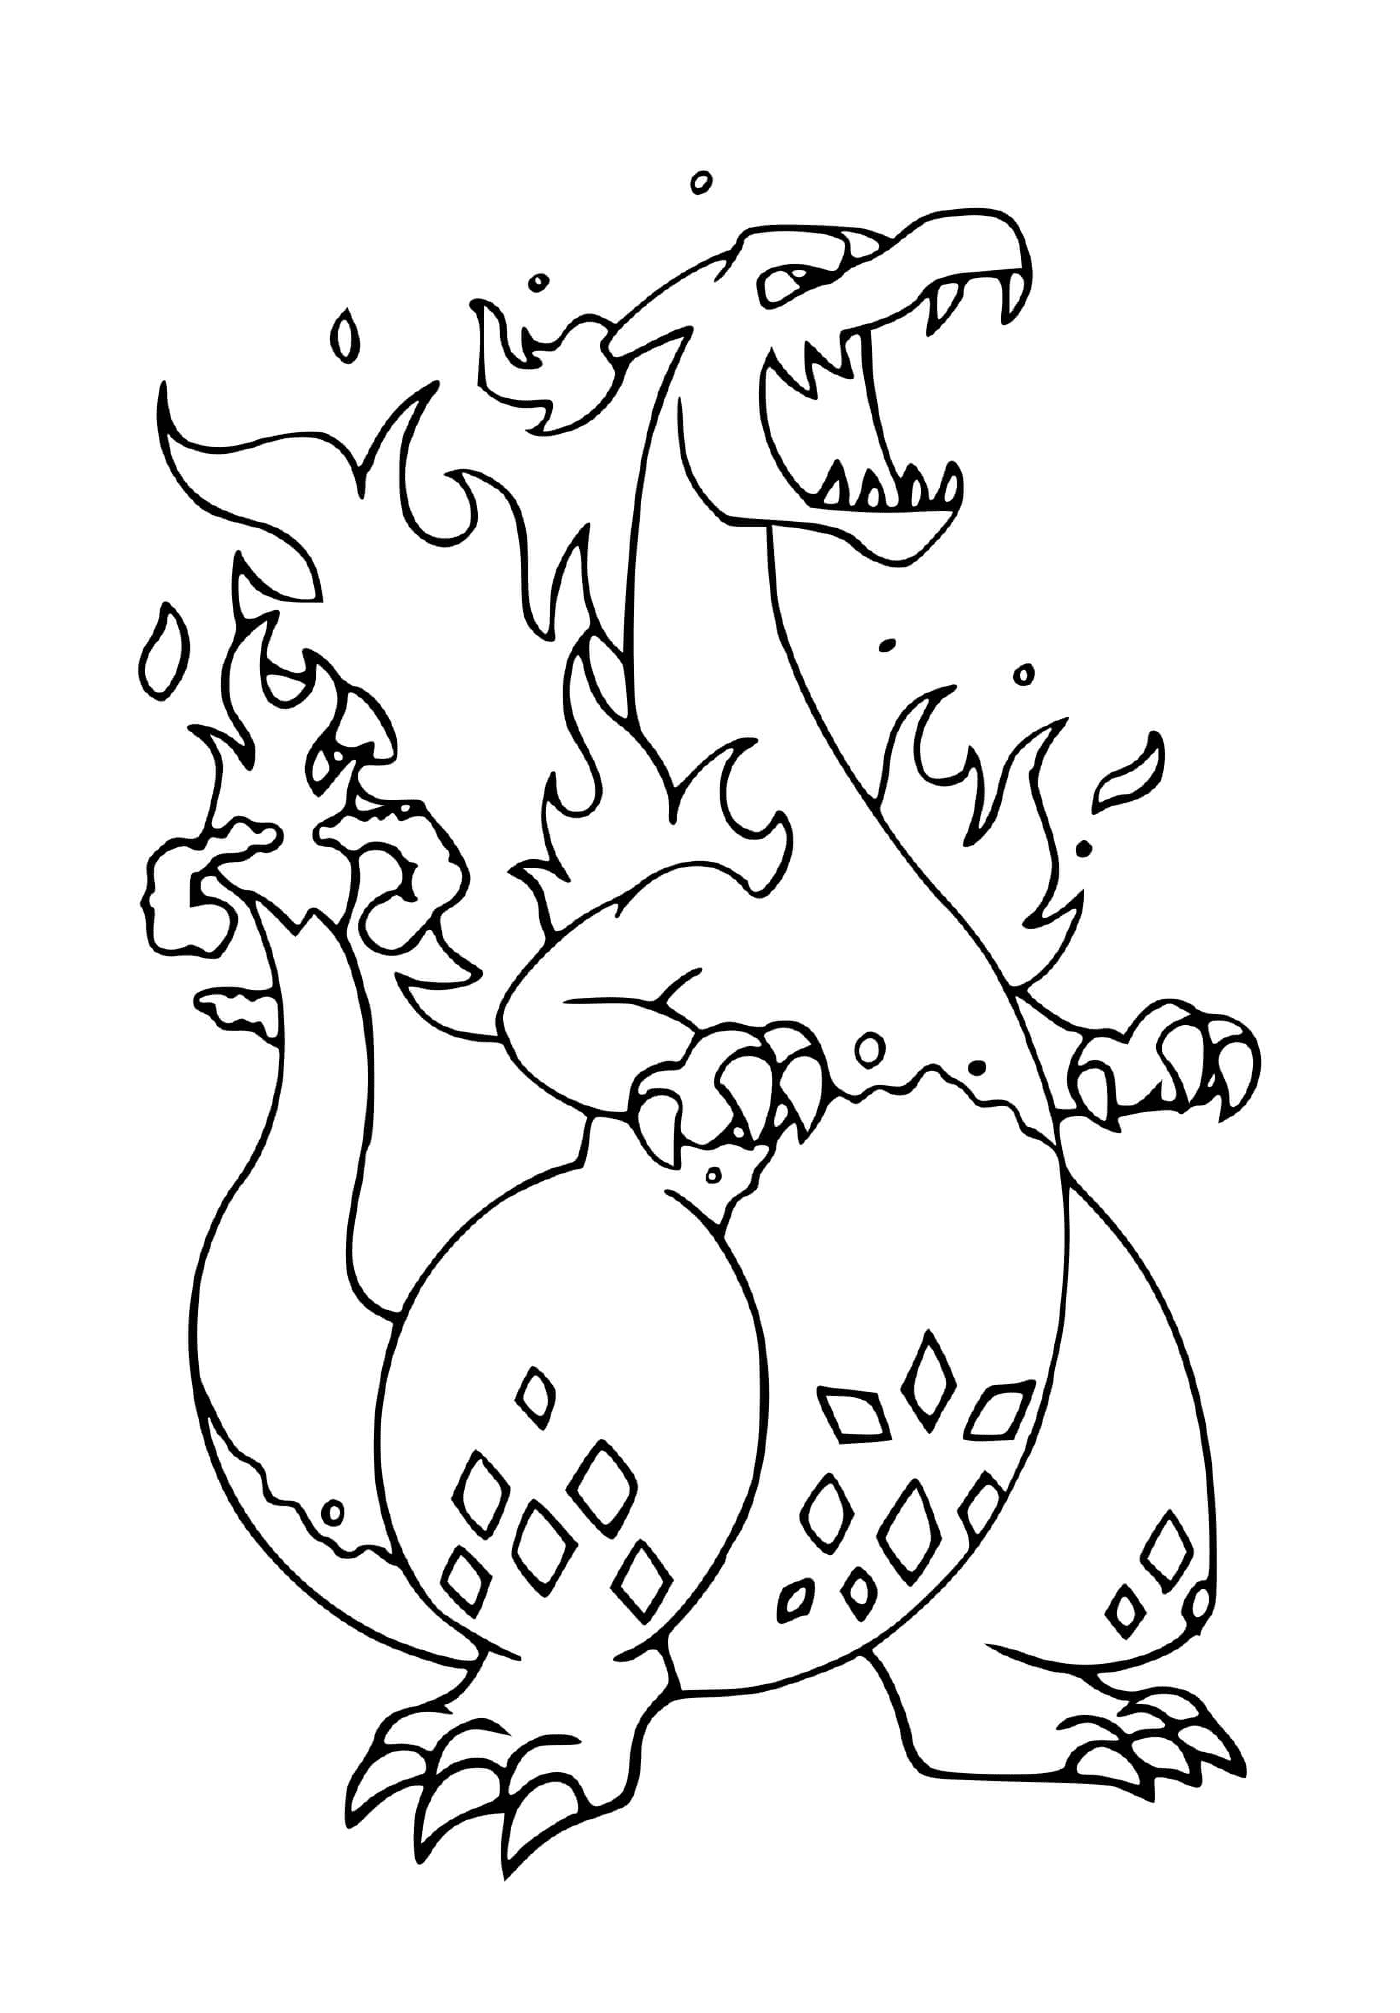  Pokémon fire with flames 